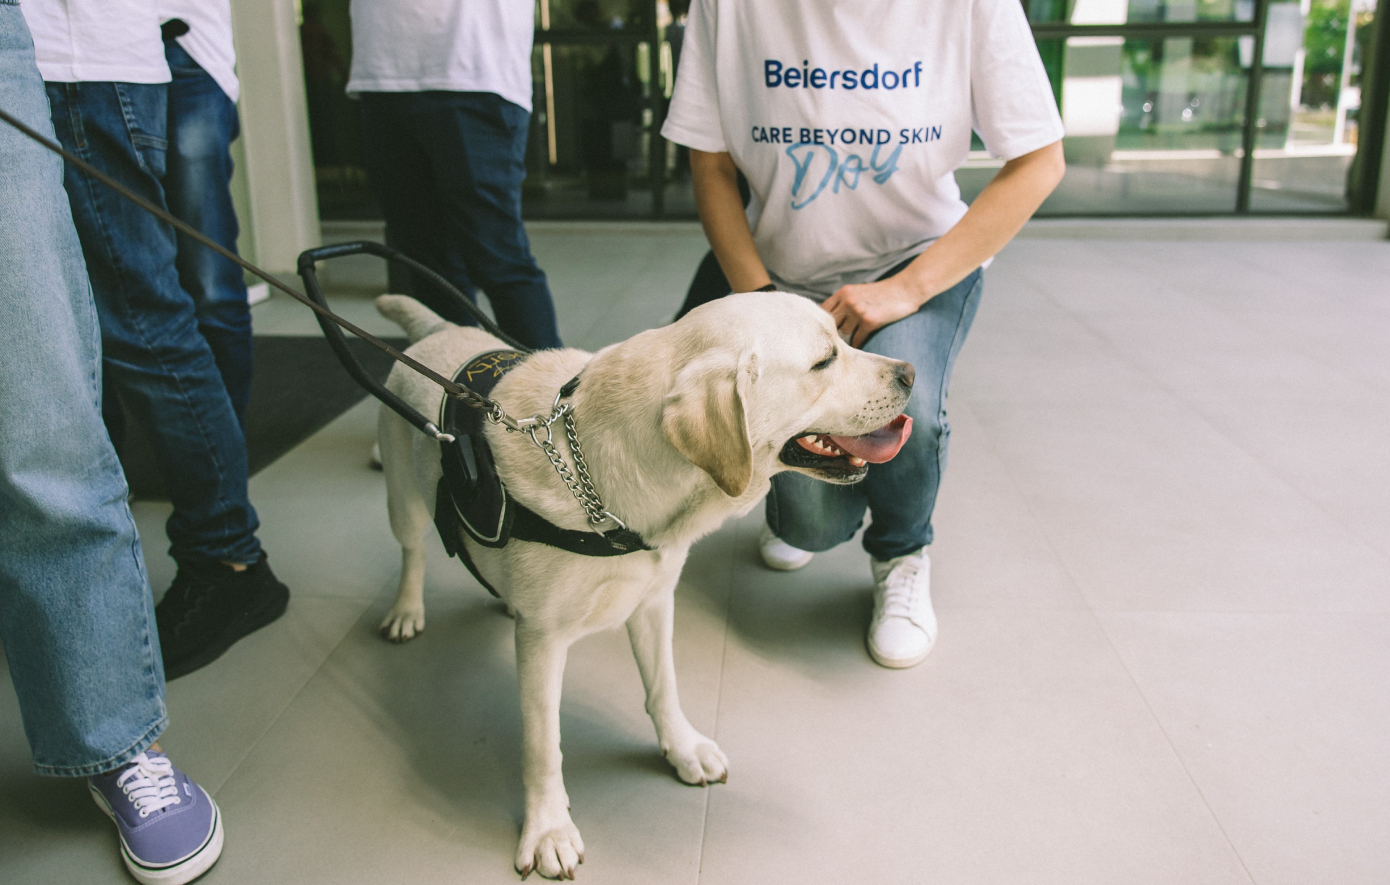 Care Beyond Skin Day: Η εθελοντική δράση της Beiersdorf Hellas για άτομα με οπτική βλάβη